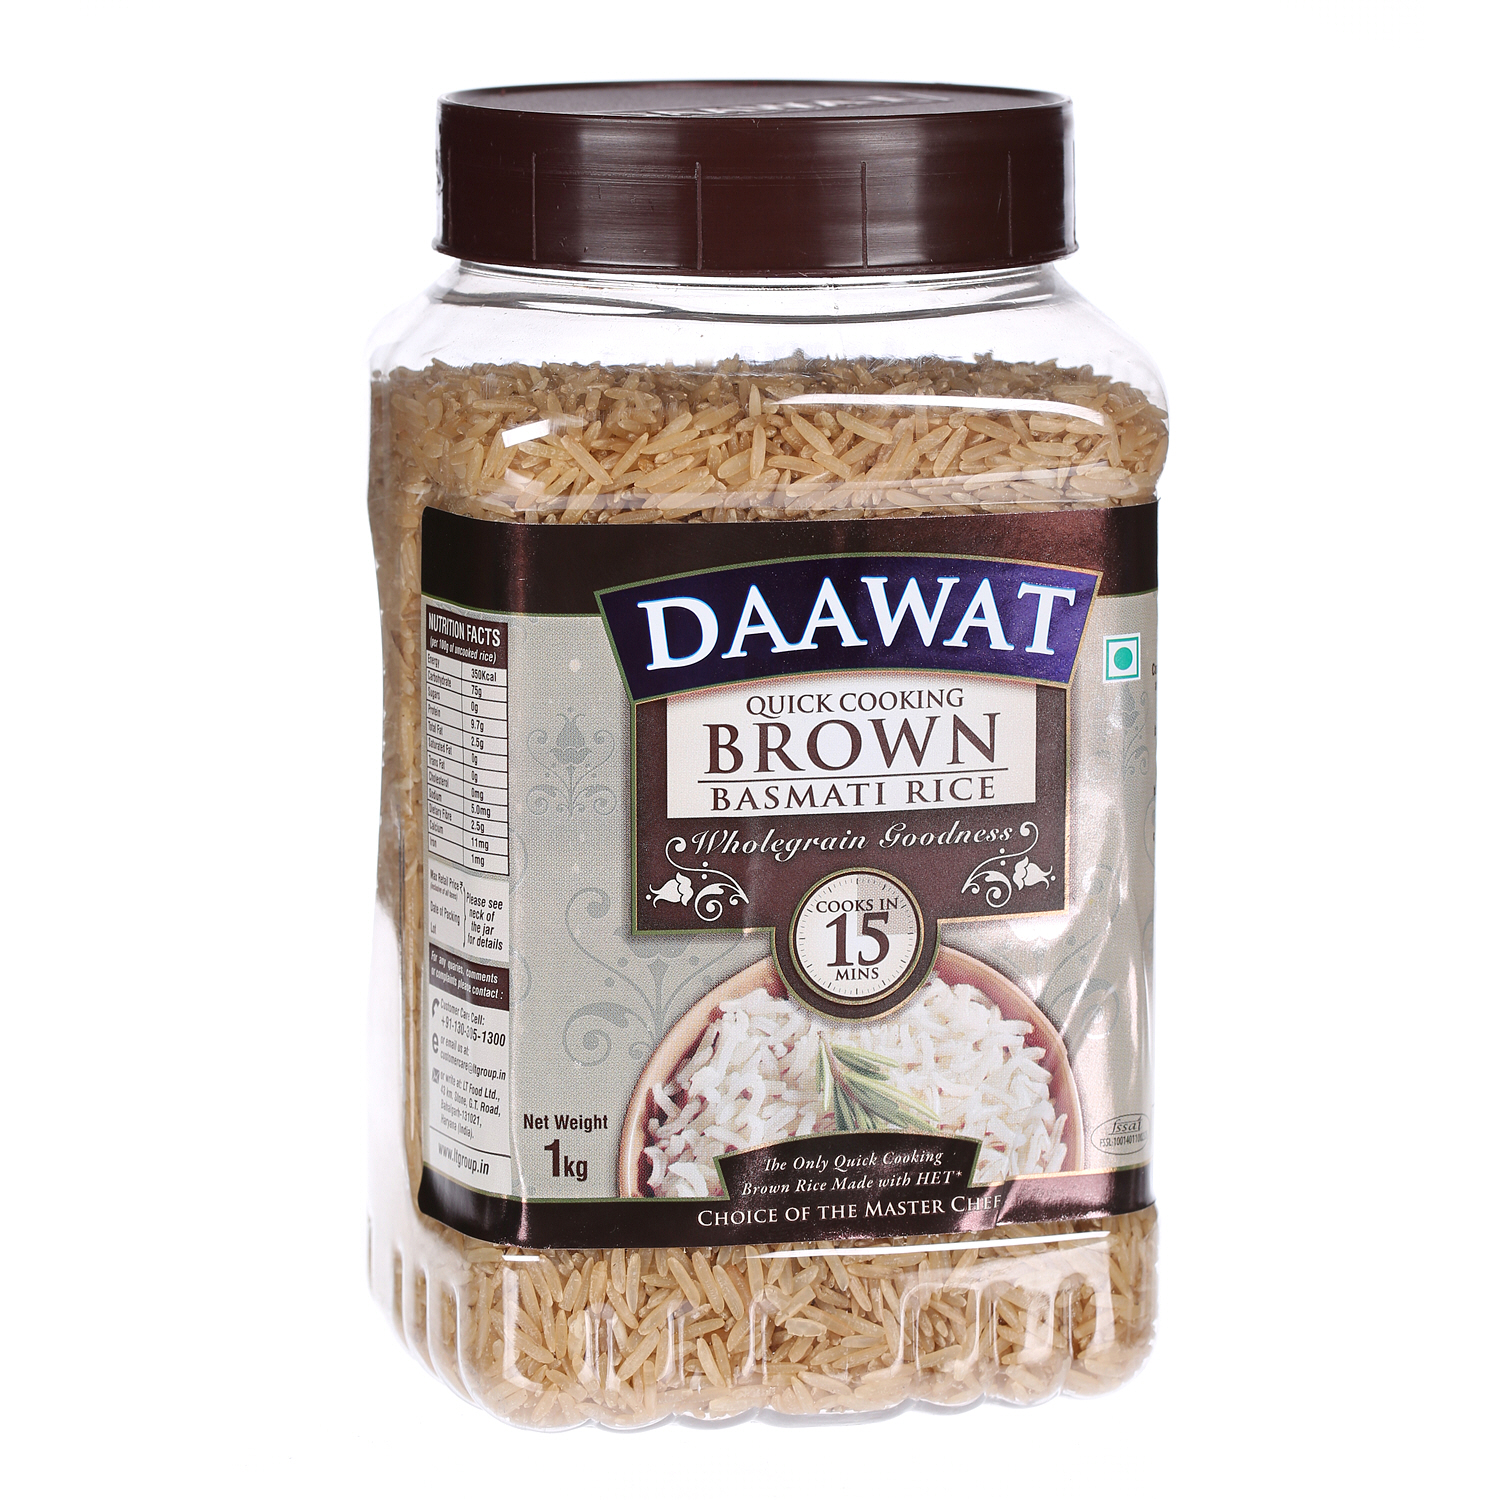 Daawat Basmati Rice Quick Cooking Brown 1Kg